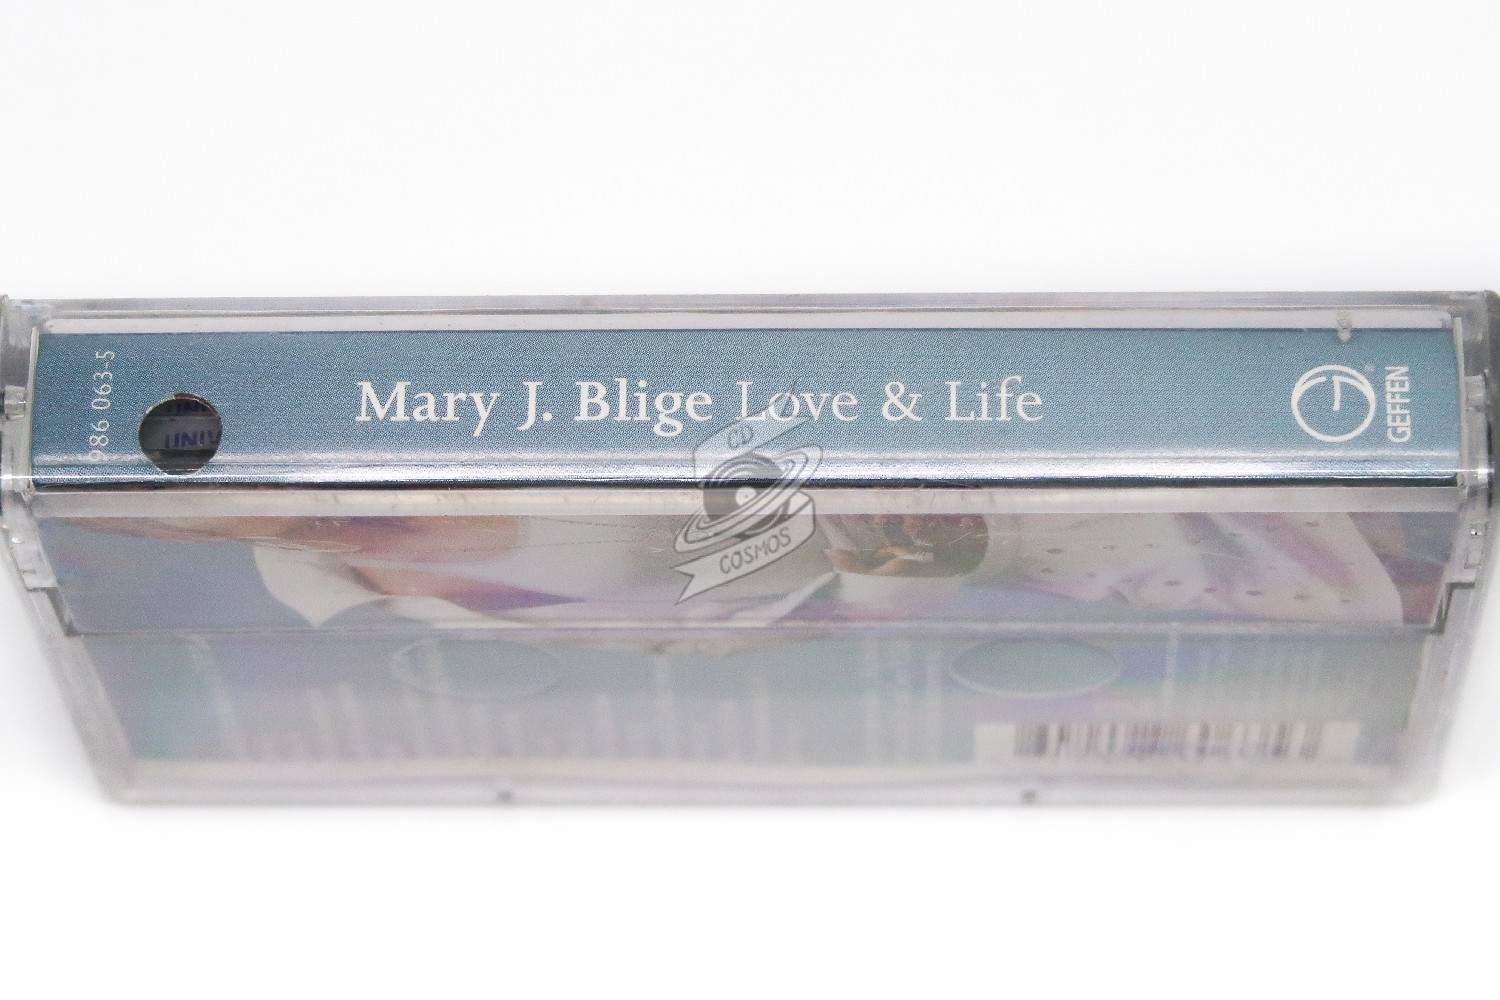 Mary J. Blige - Love & Life - cdcosmos